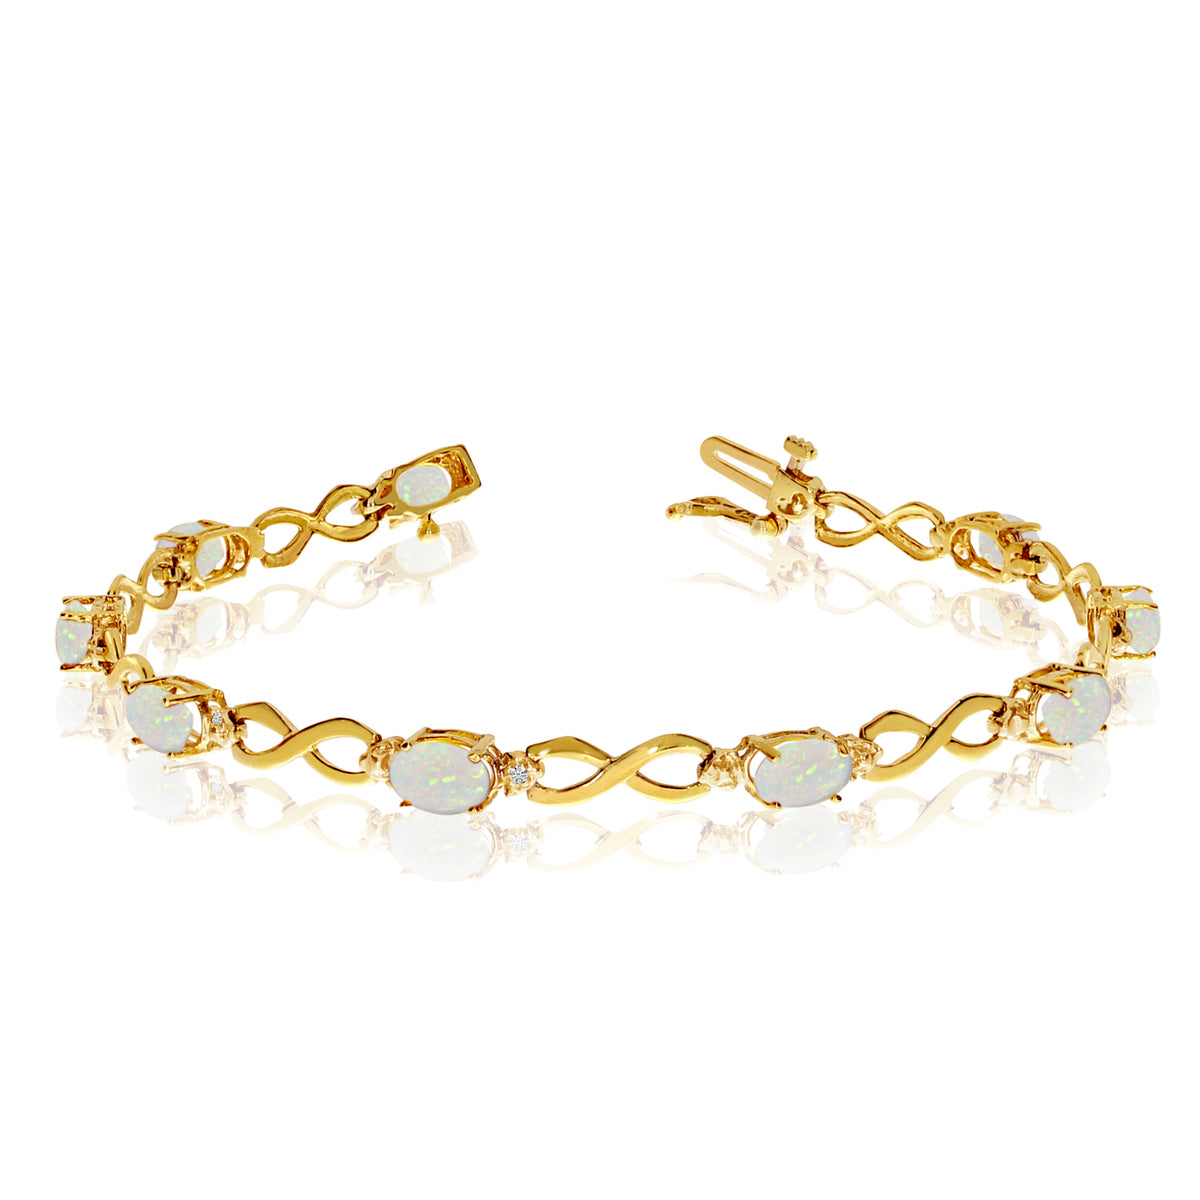 10K Yellow Gold Oval Opal Stones And Diamonds Infinity Tennis Bracelet, 7"